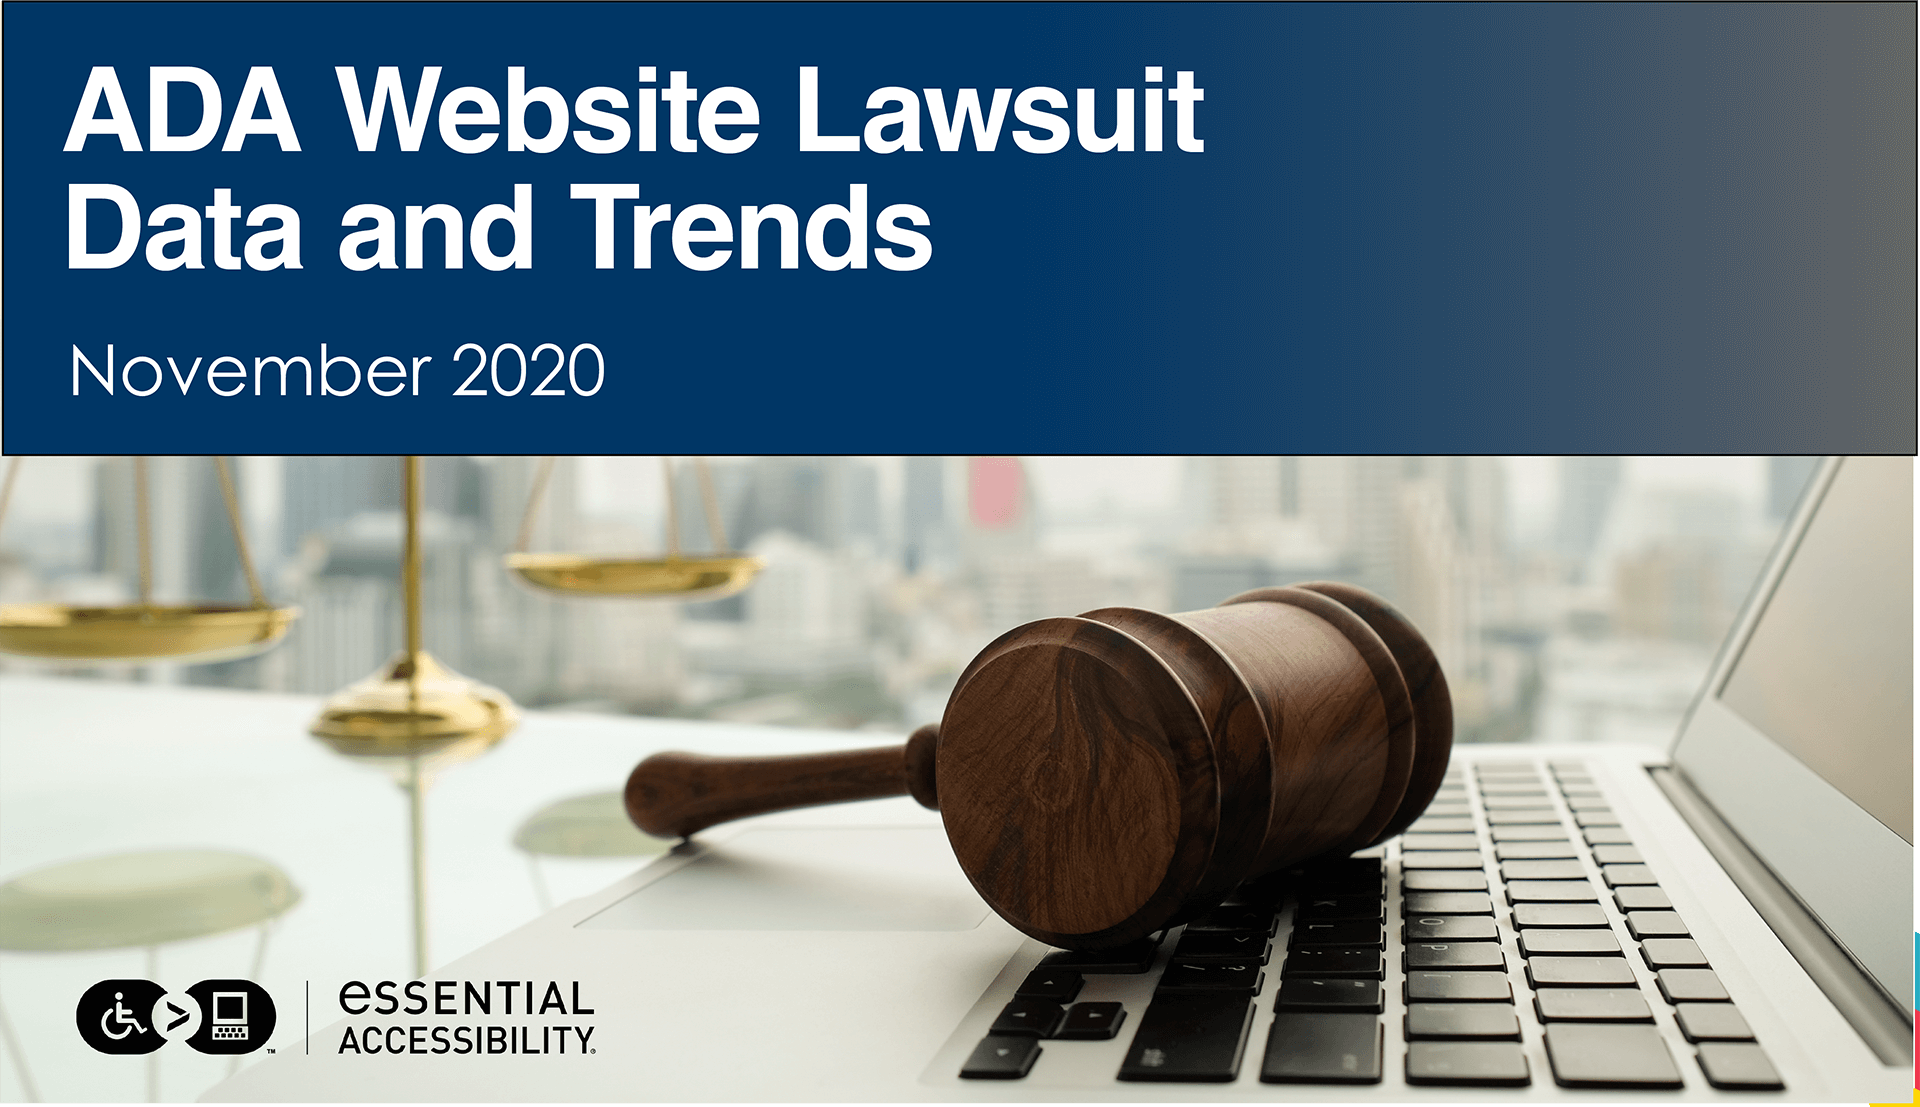 November 2020 ADA Website Lawsuit Data and Trends